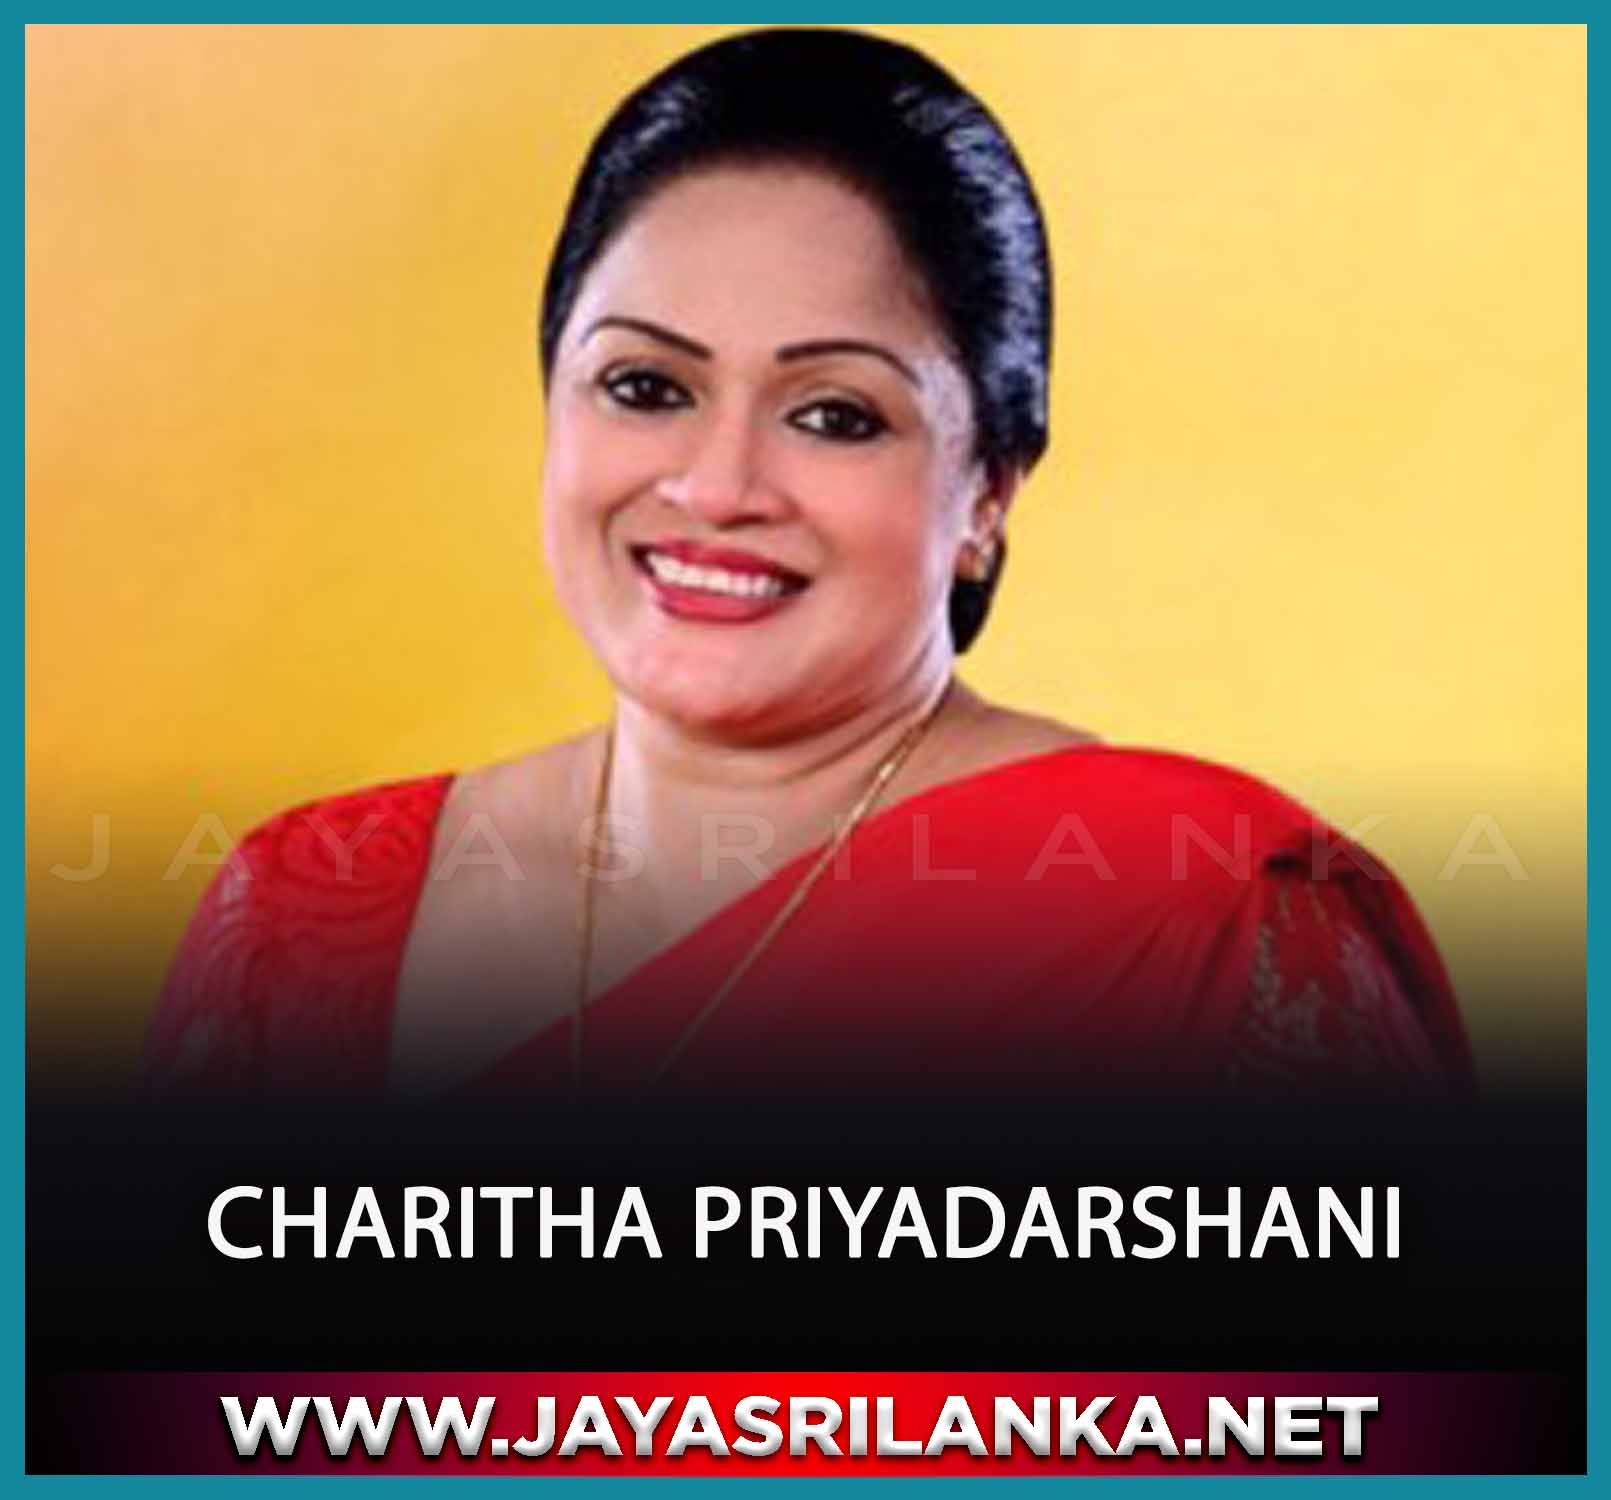 Charitha Priyadarshani Peiris  